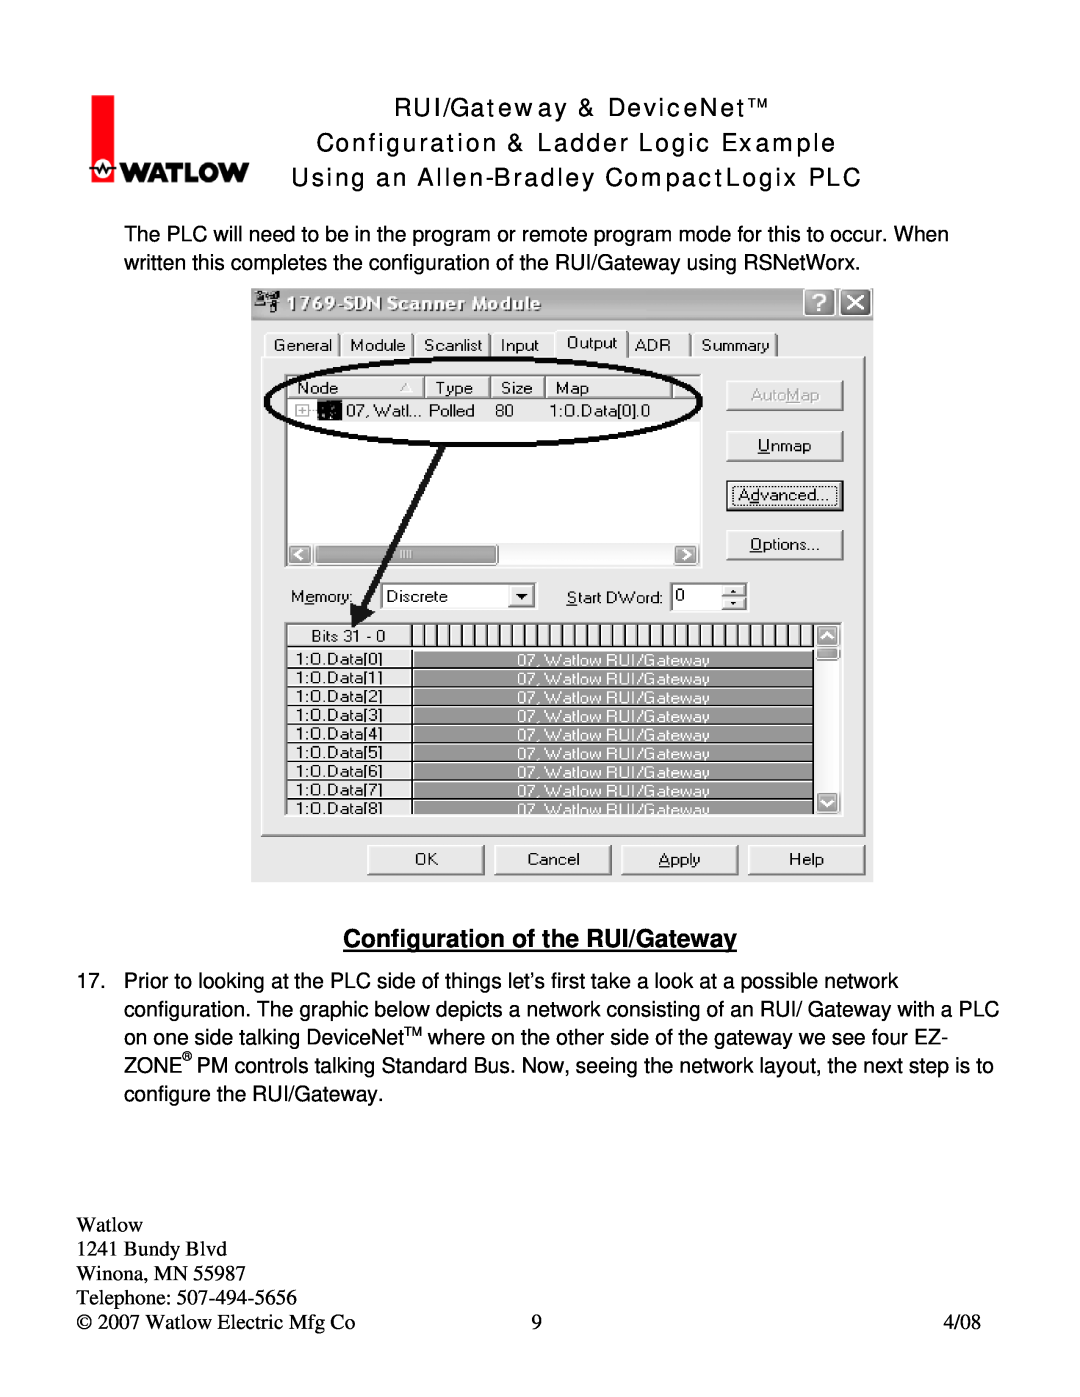 Watlow Electric Gateway & DeviceNet manual Configuration of the RUI/Gateway, Using an Allen-Bradley CompactLogix PLC 